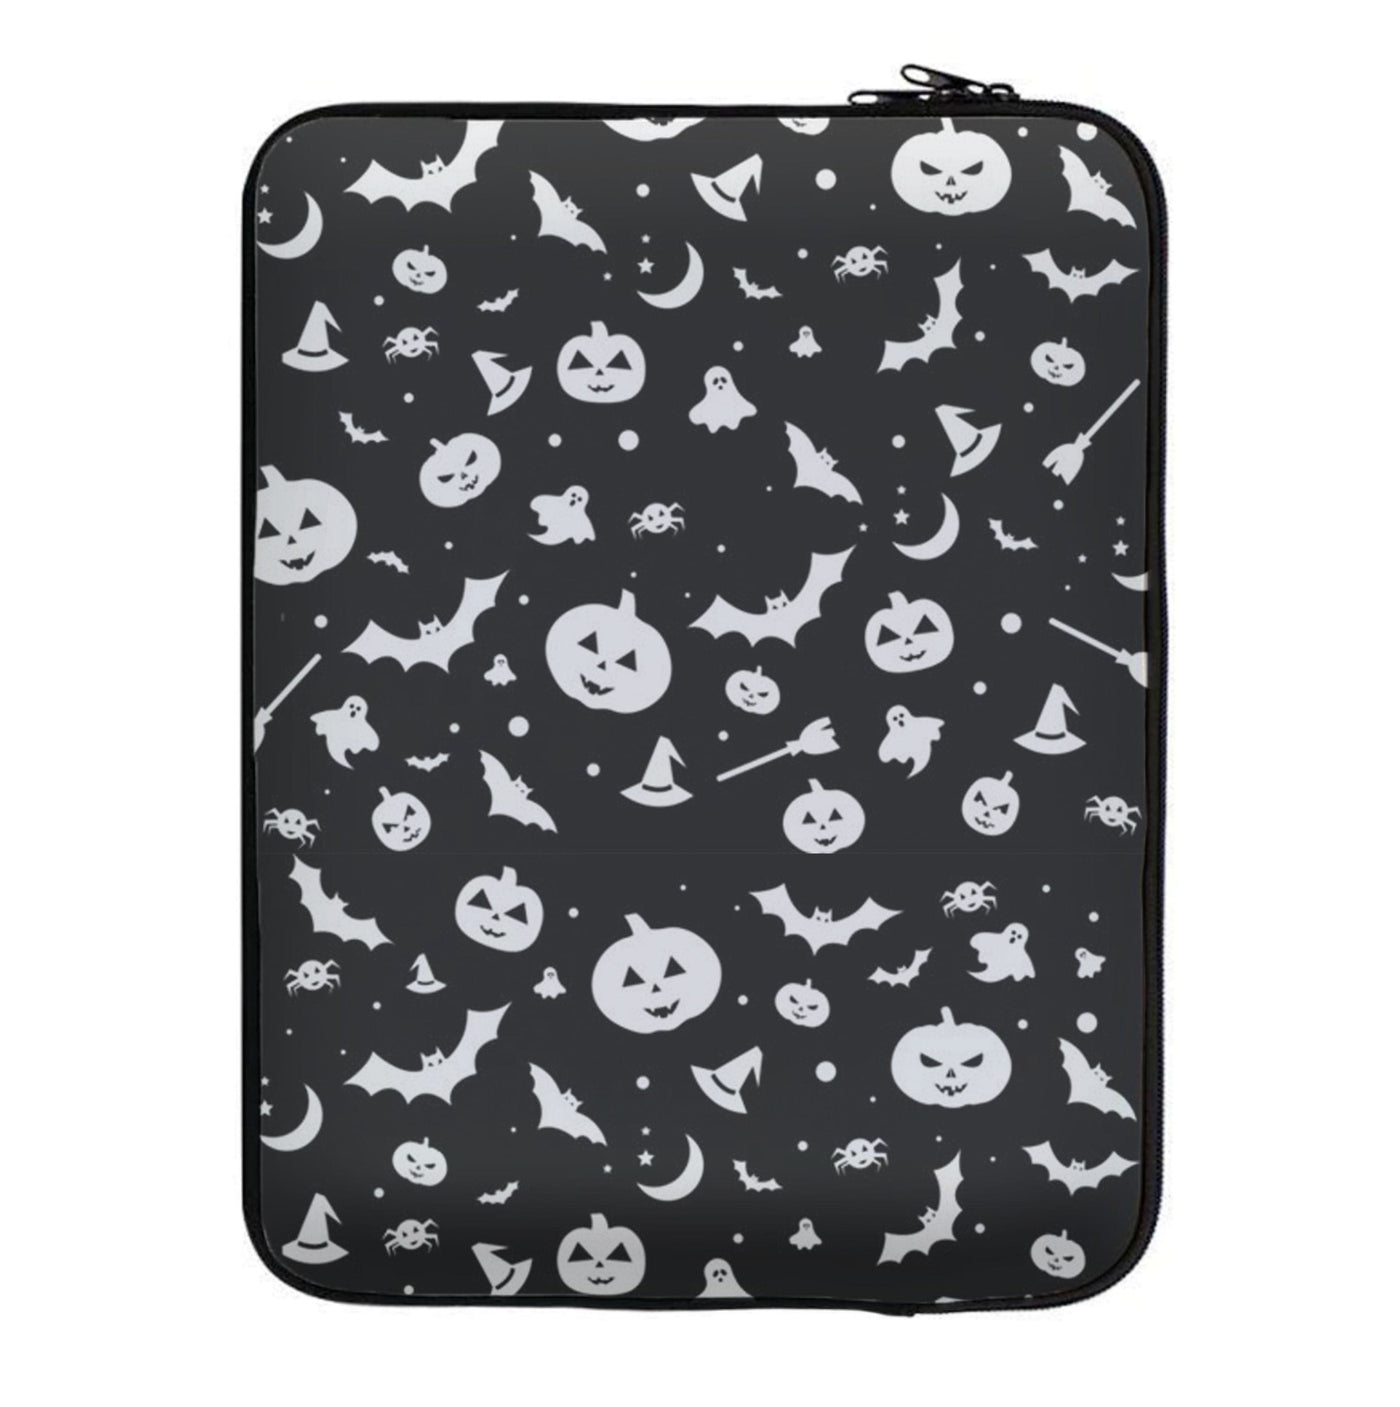 Black and White Halloween Pattern Laptop Sleeve